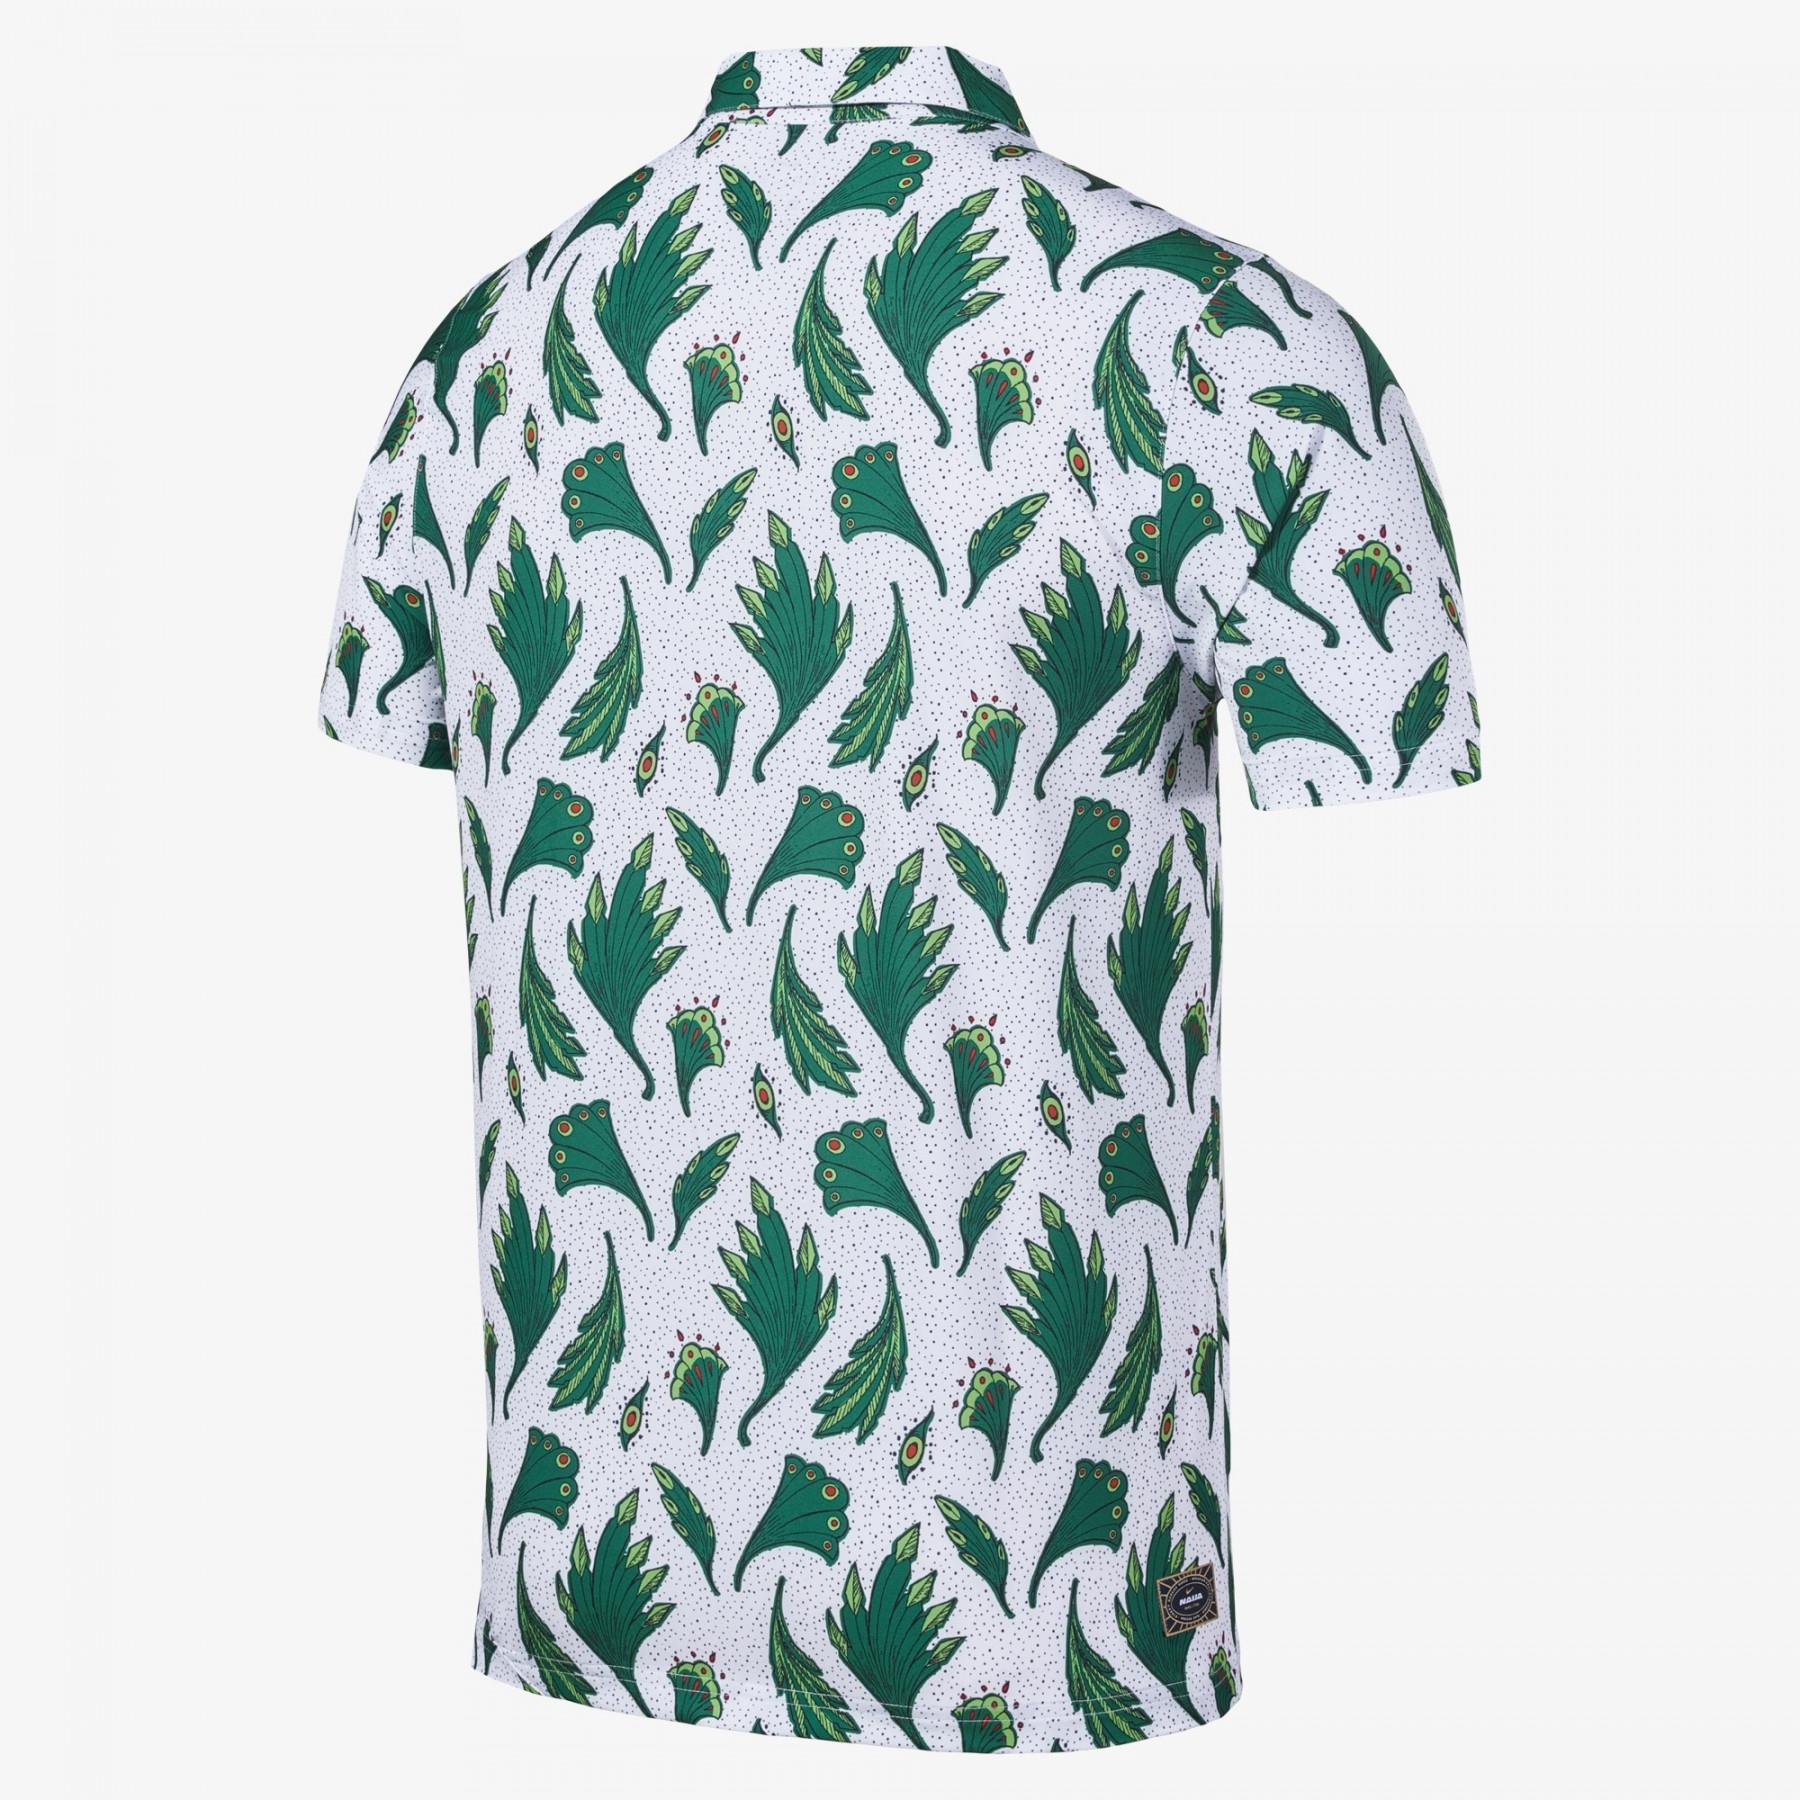 Nigeria-Skate-Shirt 2020